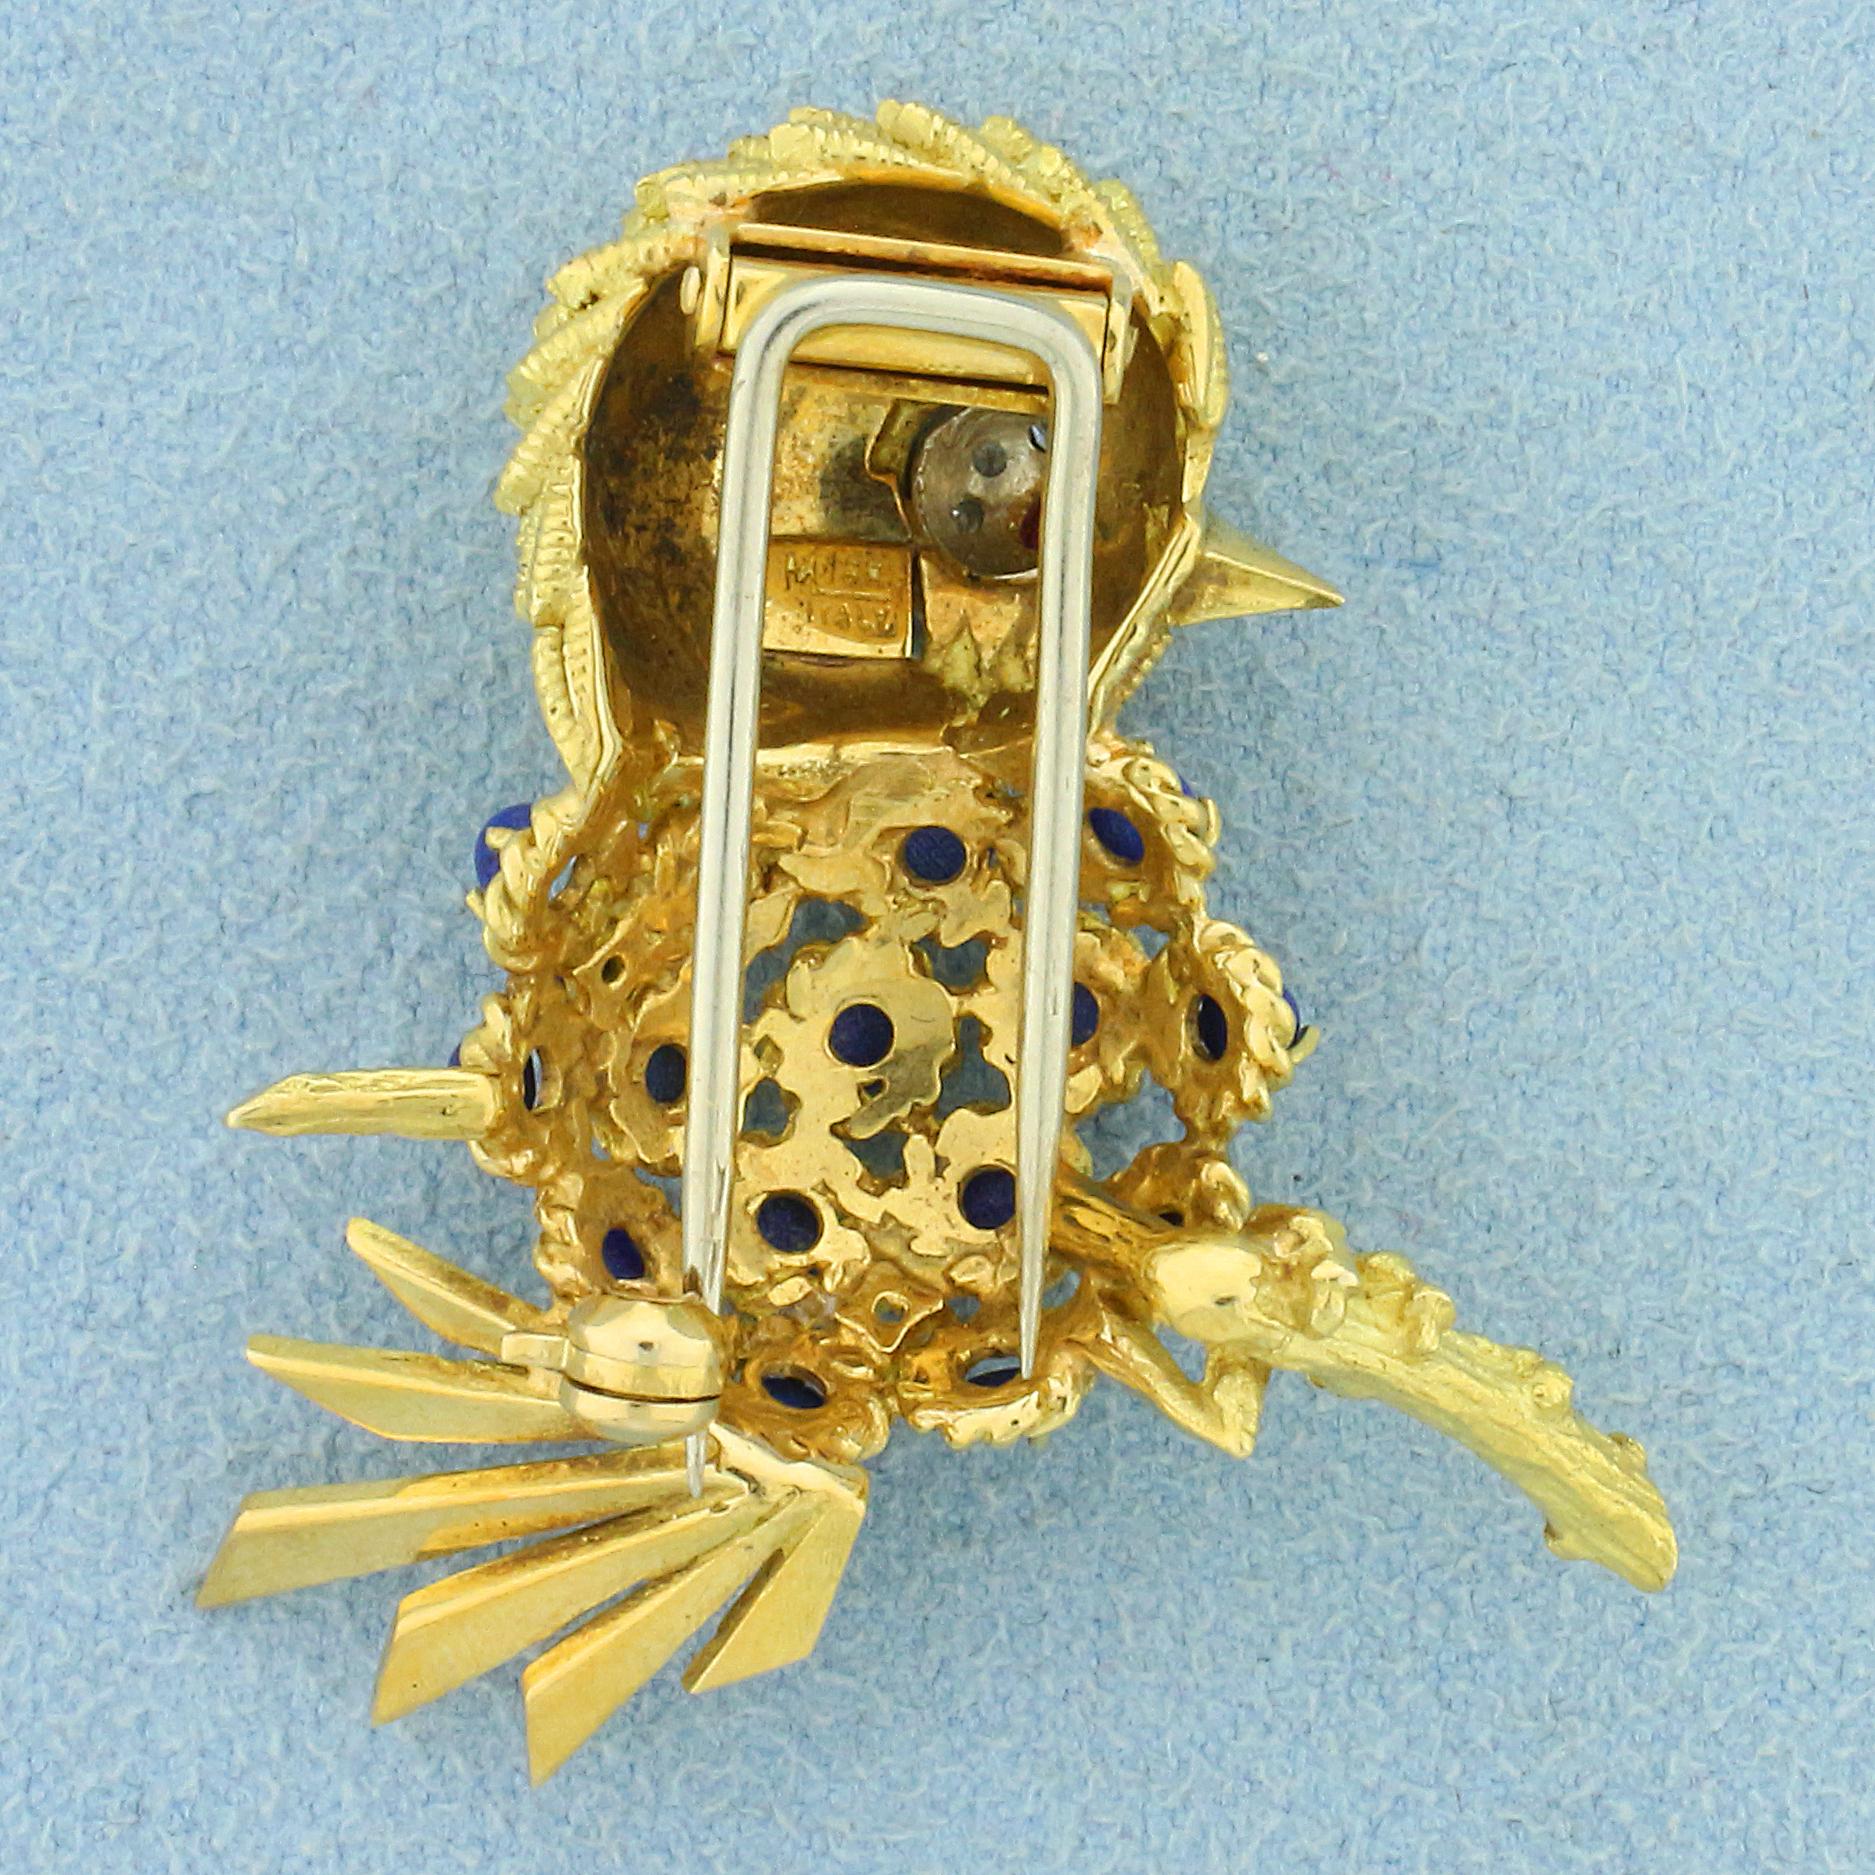 Italian Made Lapis, Ruby, And Diamond Bird Pin In 18k Yellow Gold